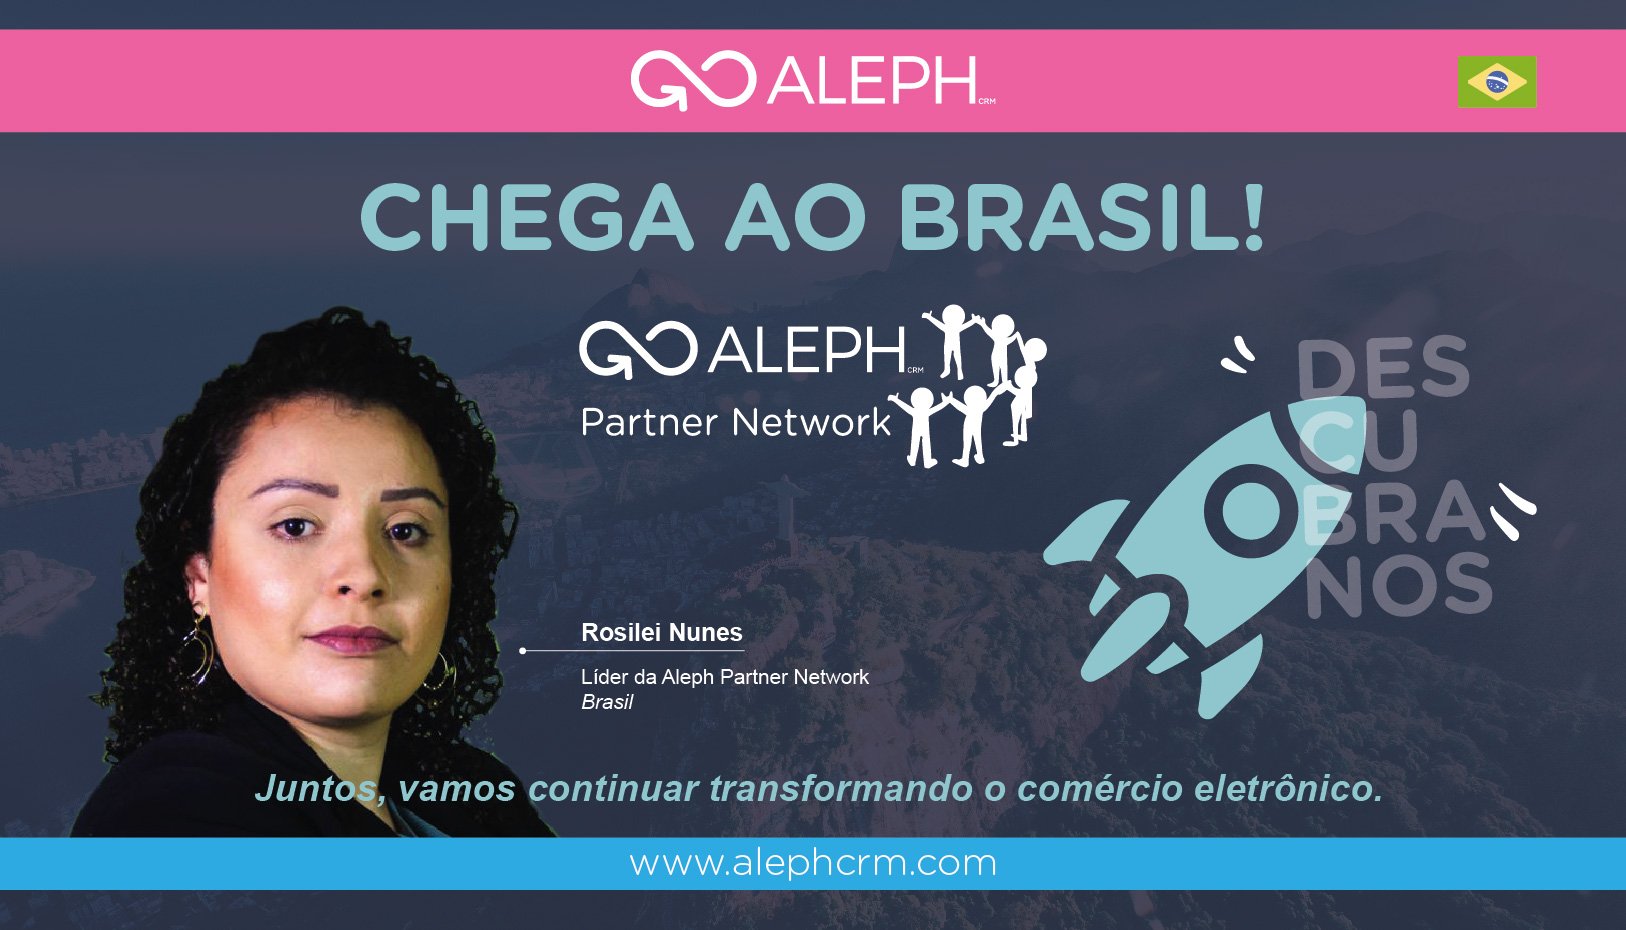 Aleph Partner Network chega ao Brasil!